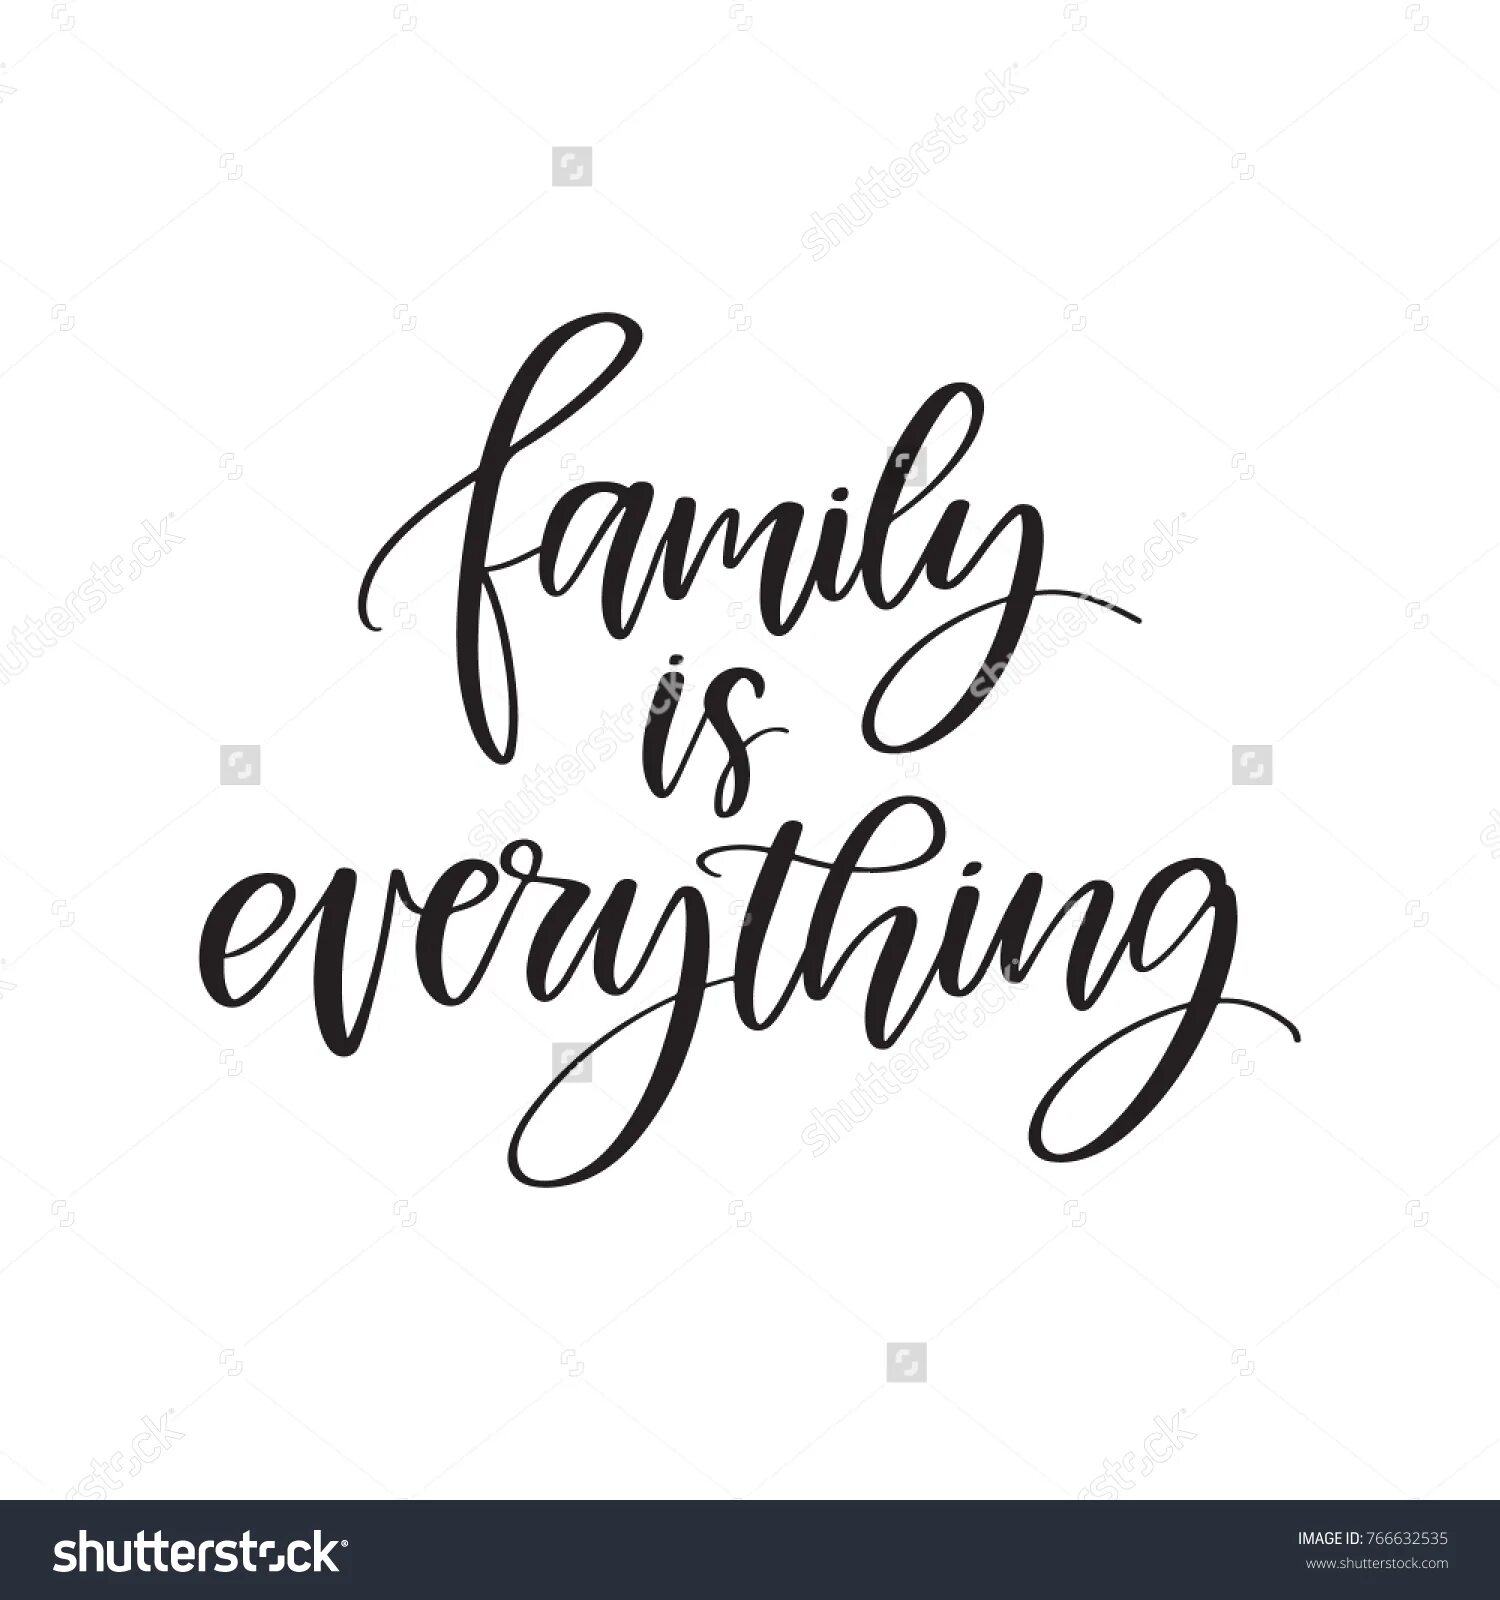 Family is everything. Фраза о семье каллиграфия.